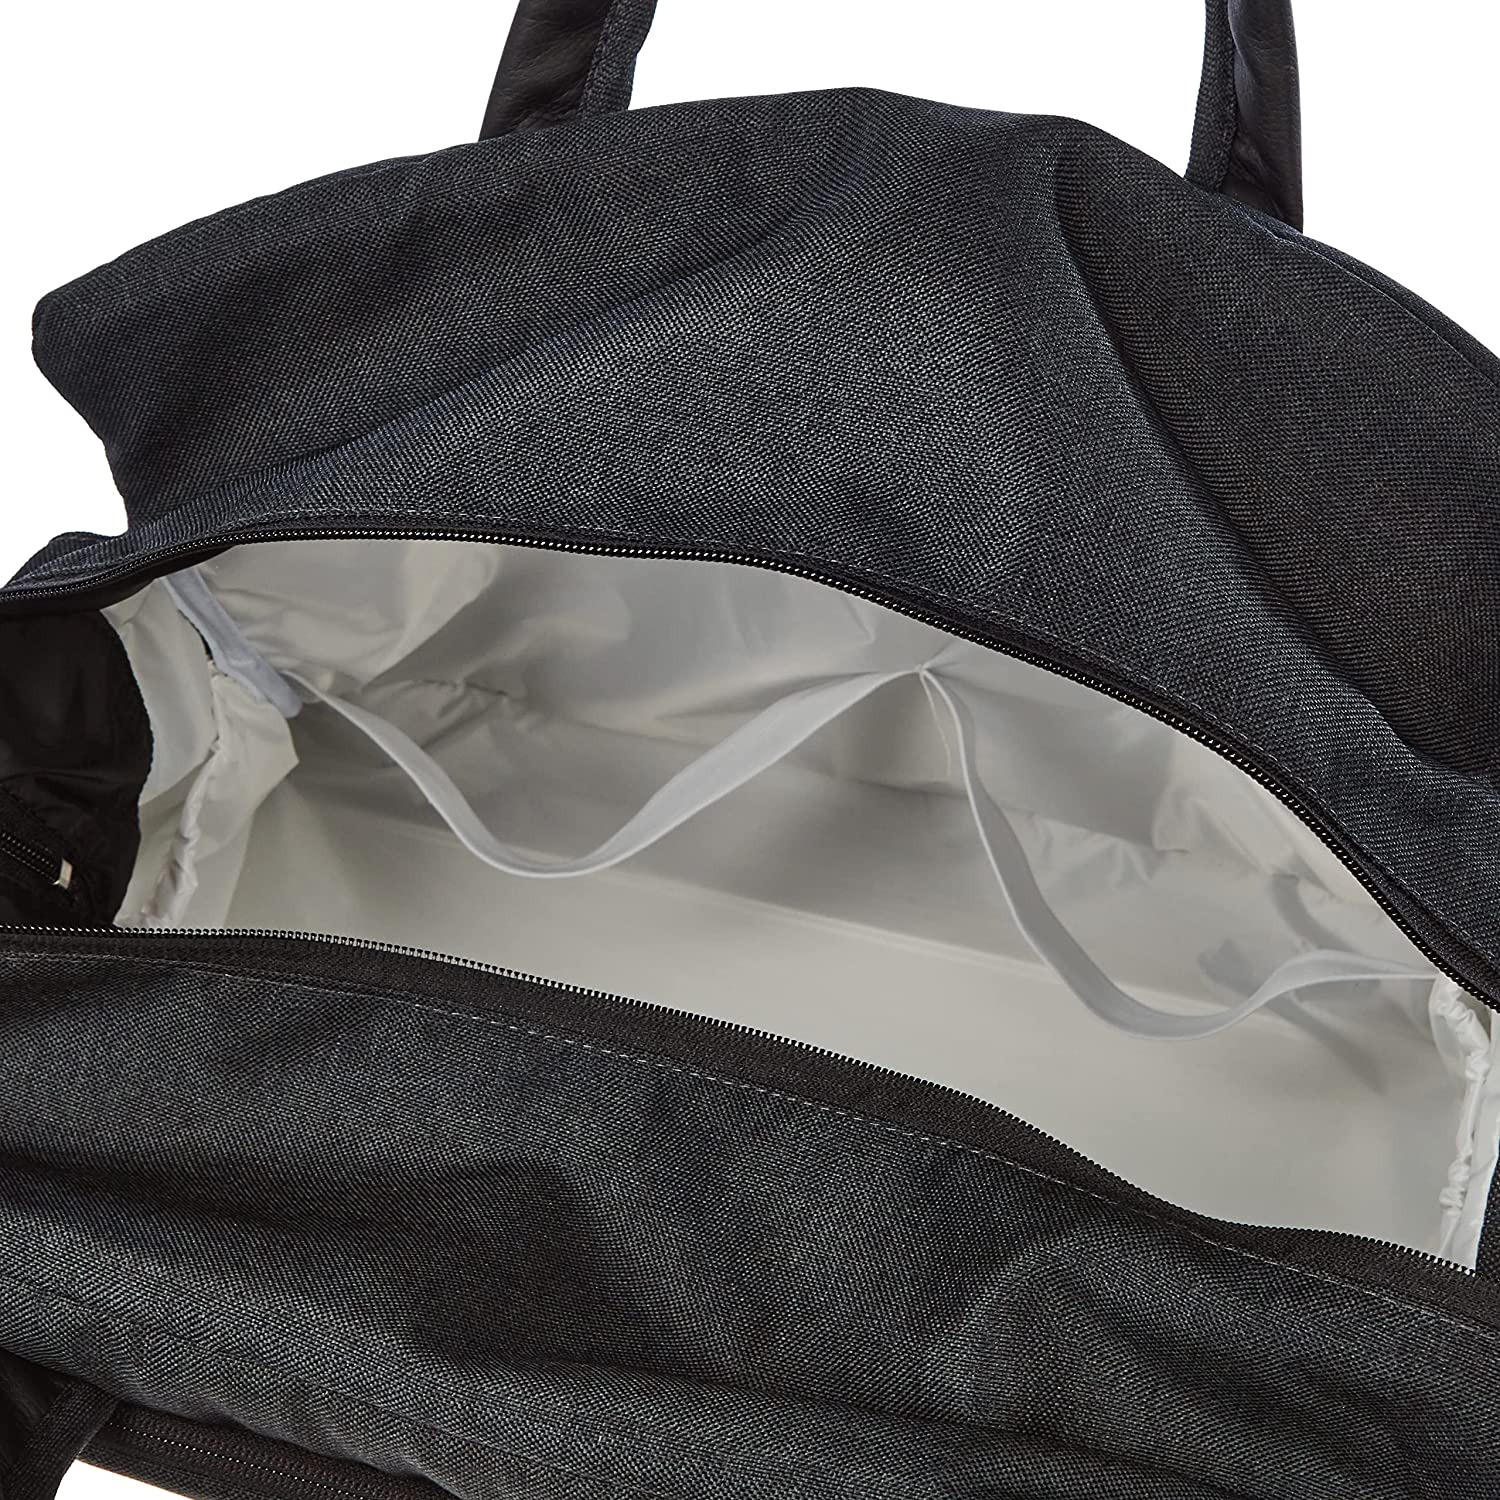 Cam - Celine Baby Changing bag, larges bag with multifunction, travel bag, on the go, convertible, Mum & dad bag, diaper bag, bag bottle holder, hospital baby bag, waterproof, insulated - Dark Grey